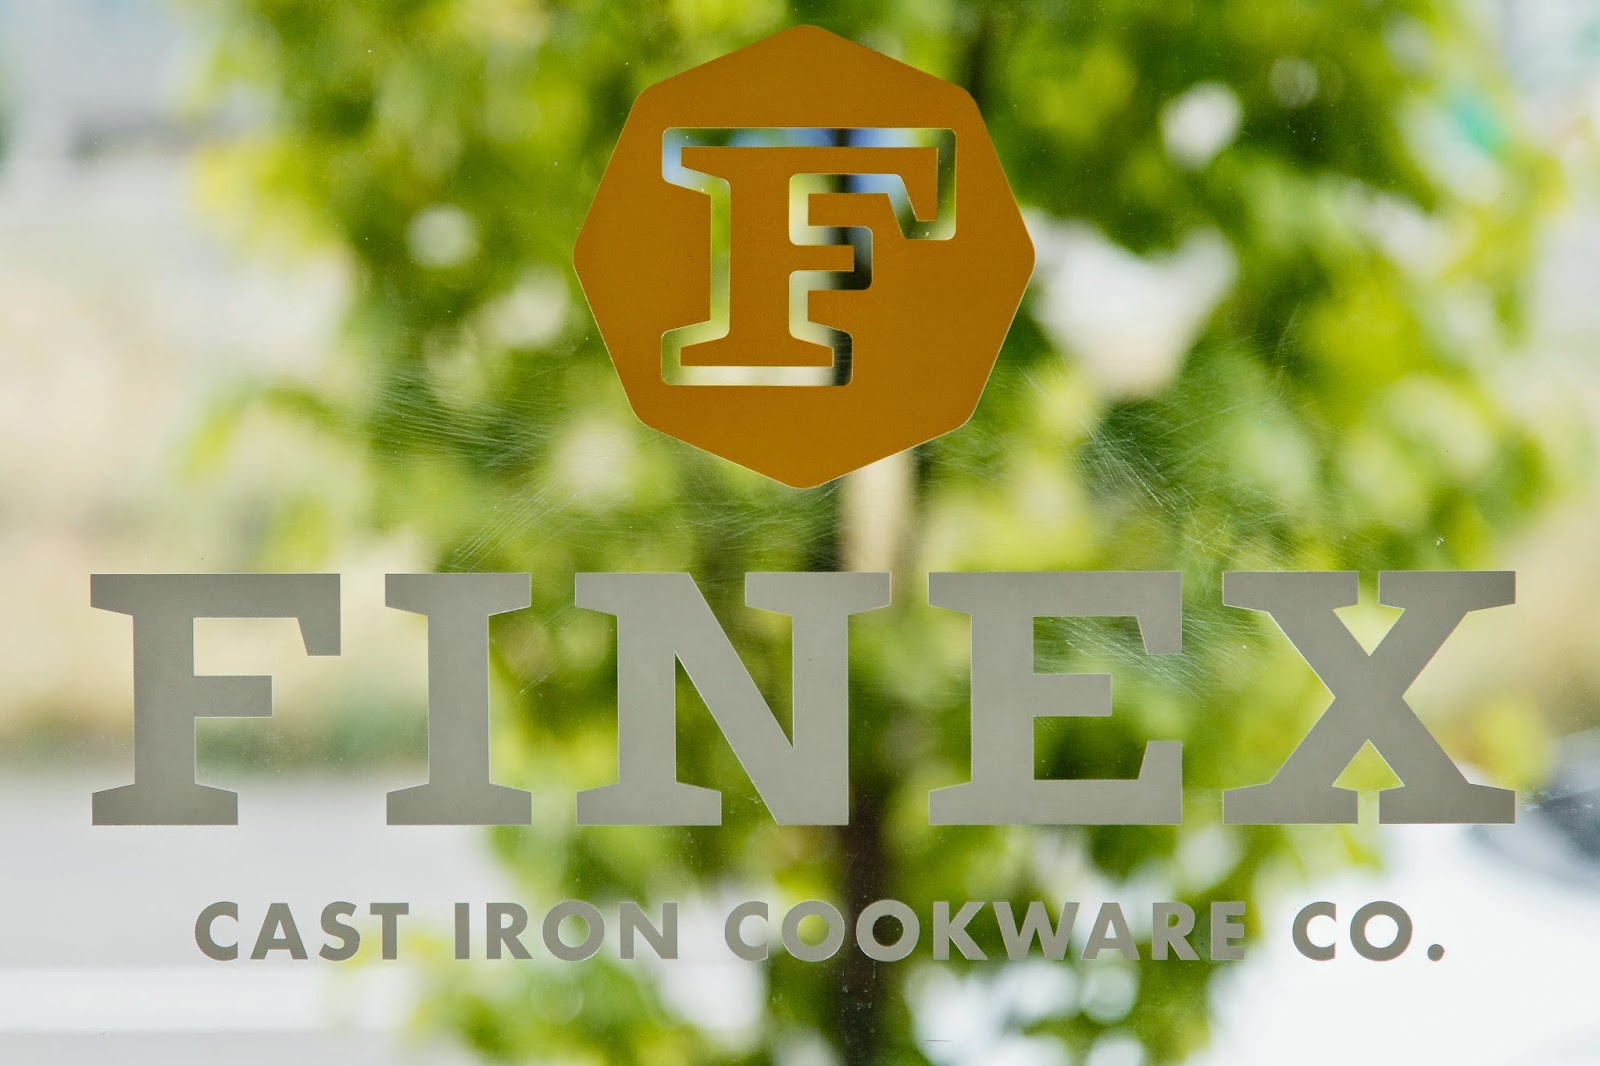 FINEX-Lodge-PressRelease  FINEX Cast Iron Cookware Co.